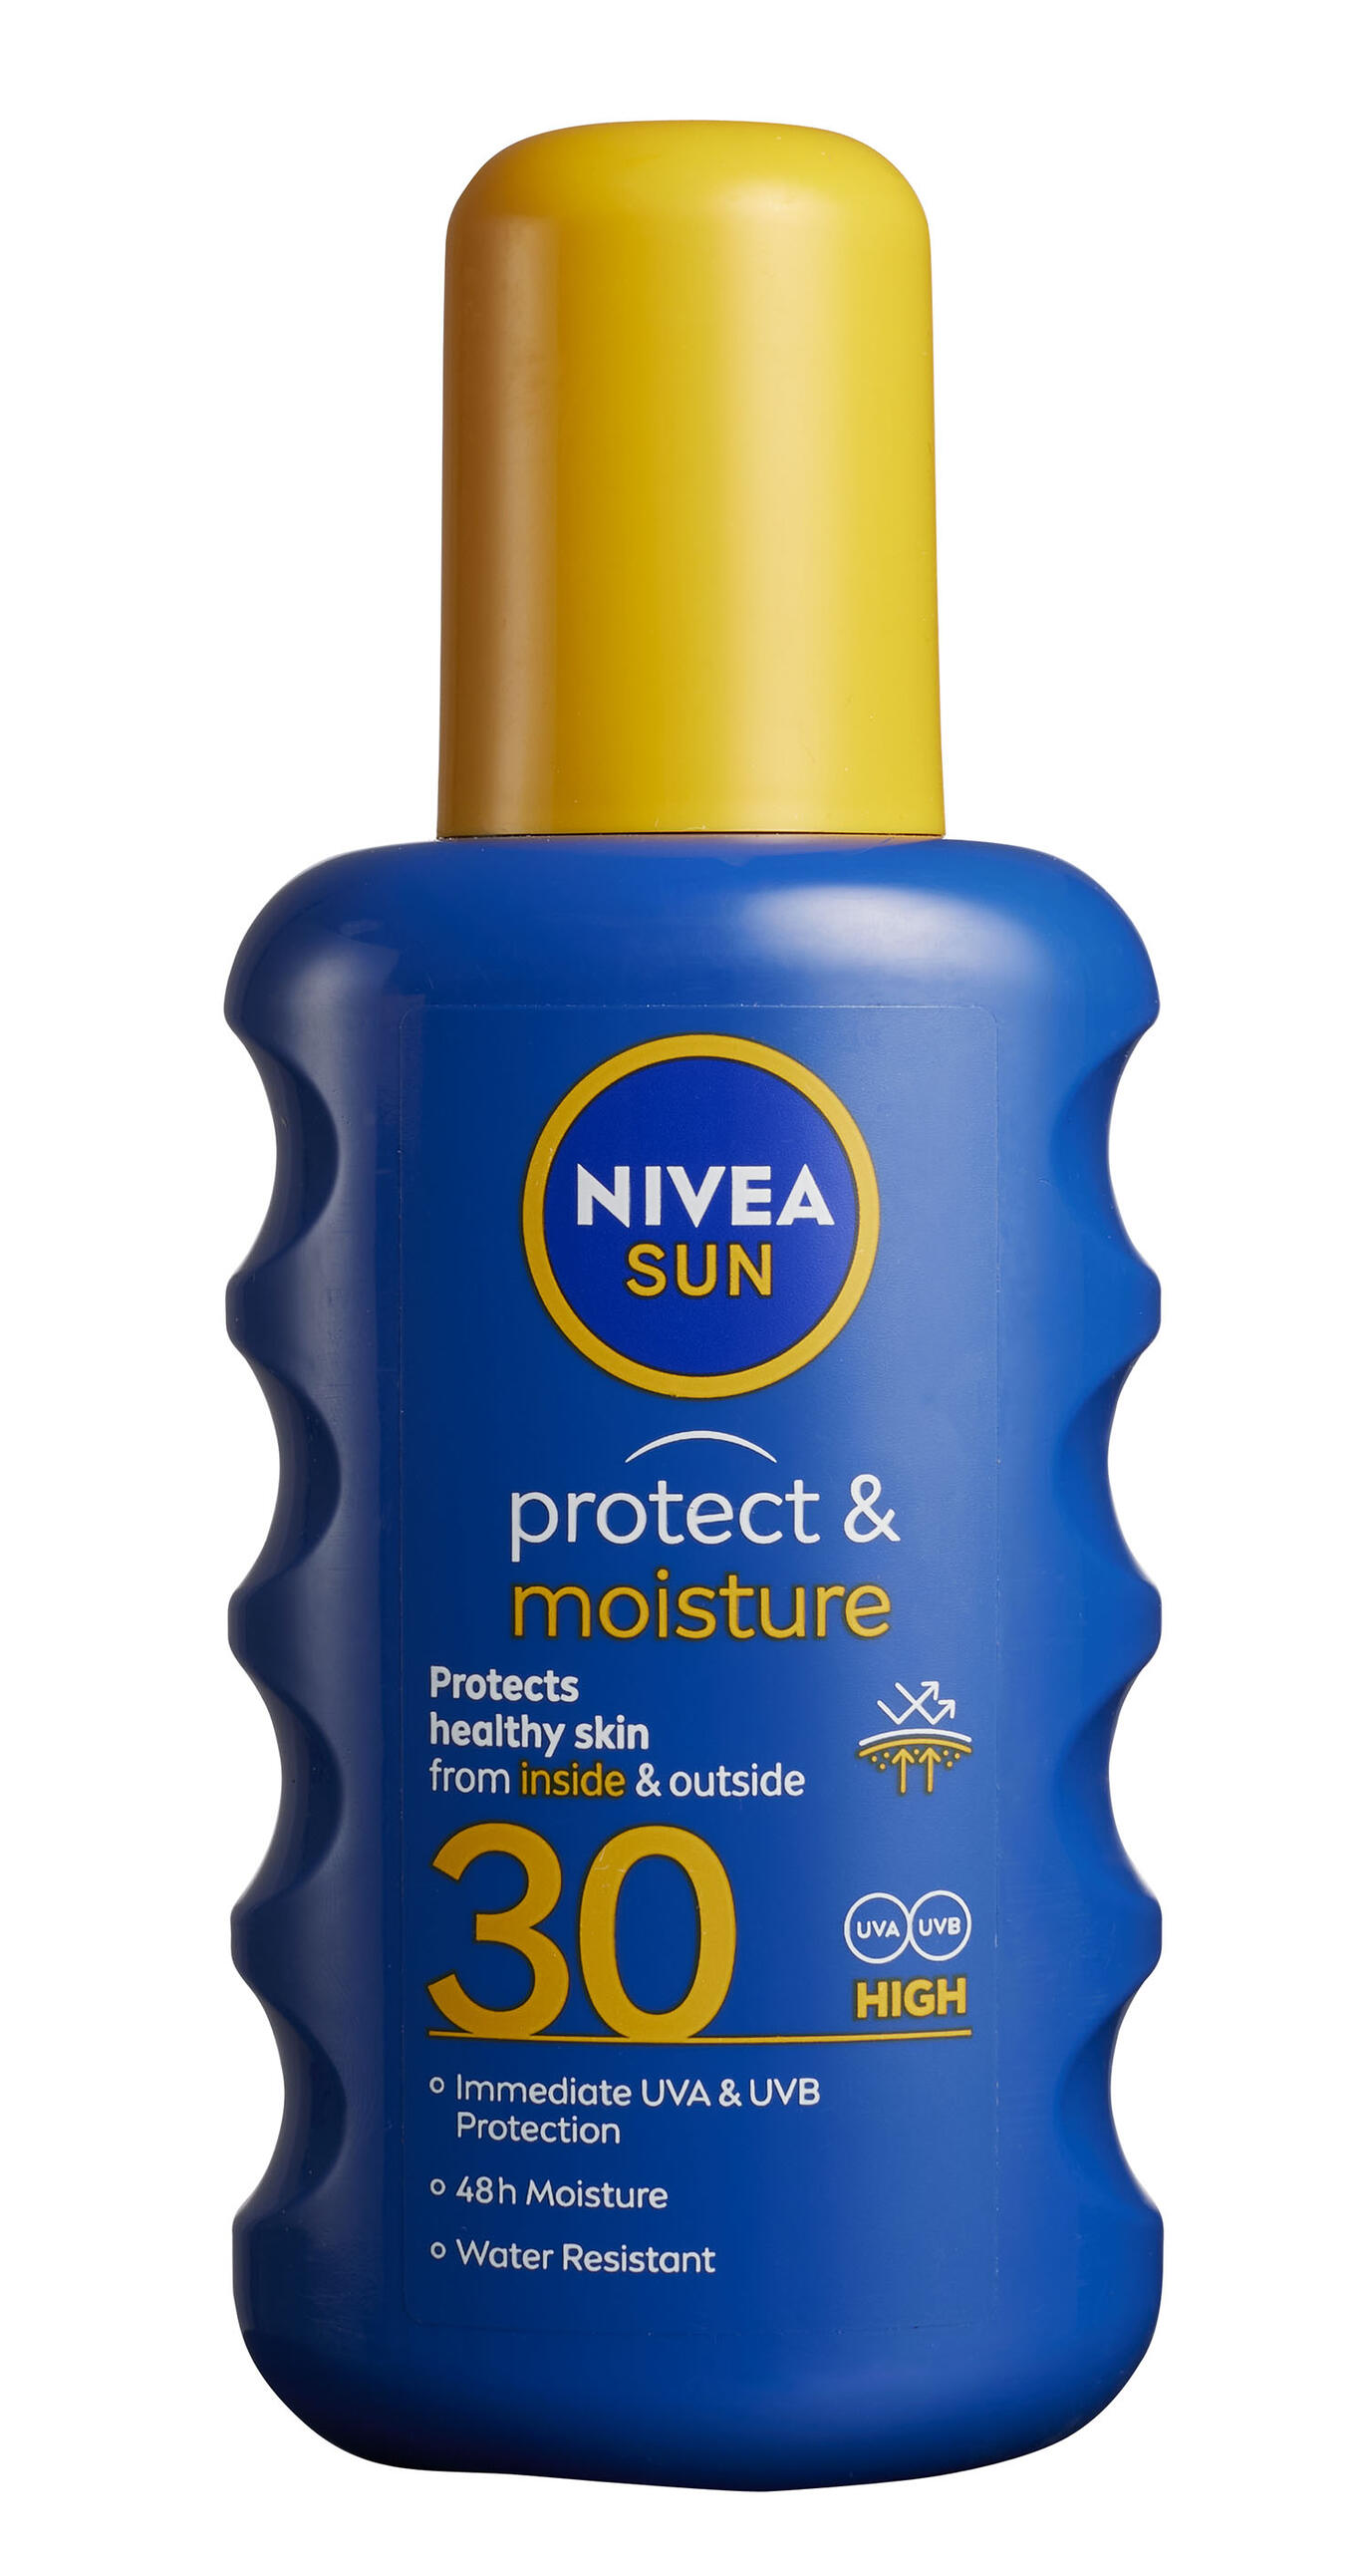 Protect & moisture SPF 30 Nivea Sun